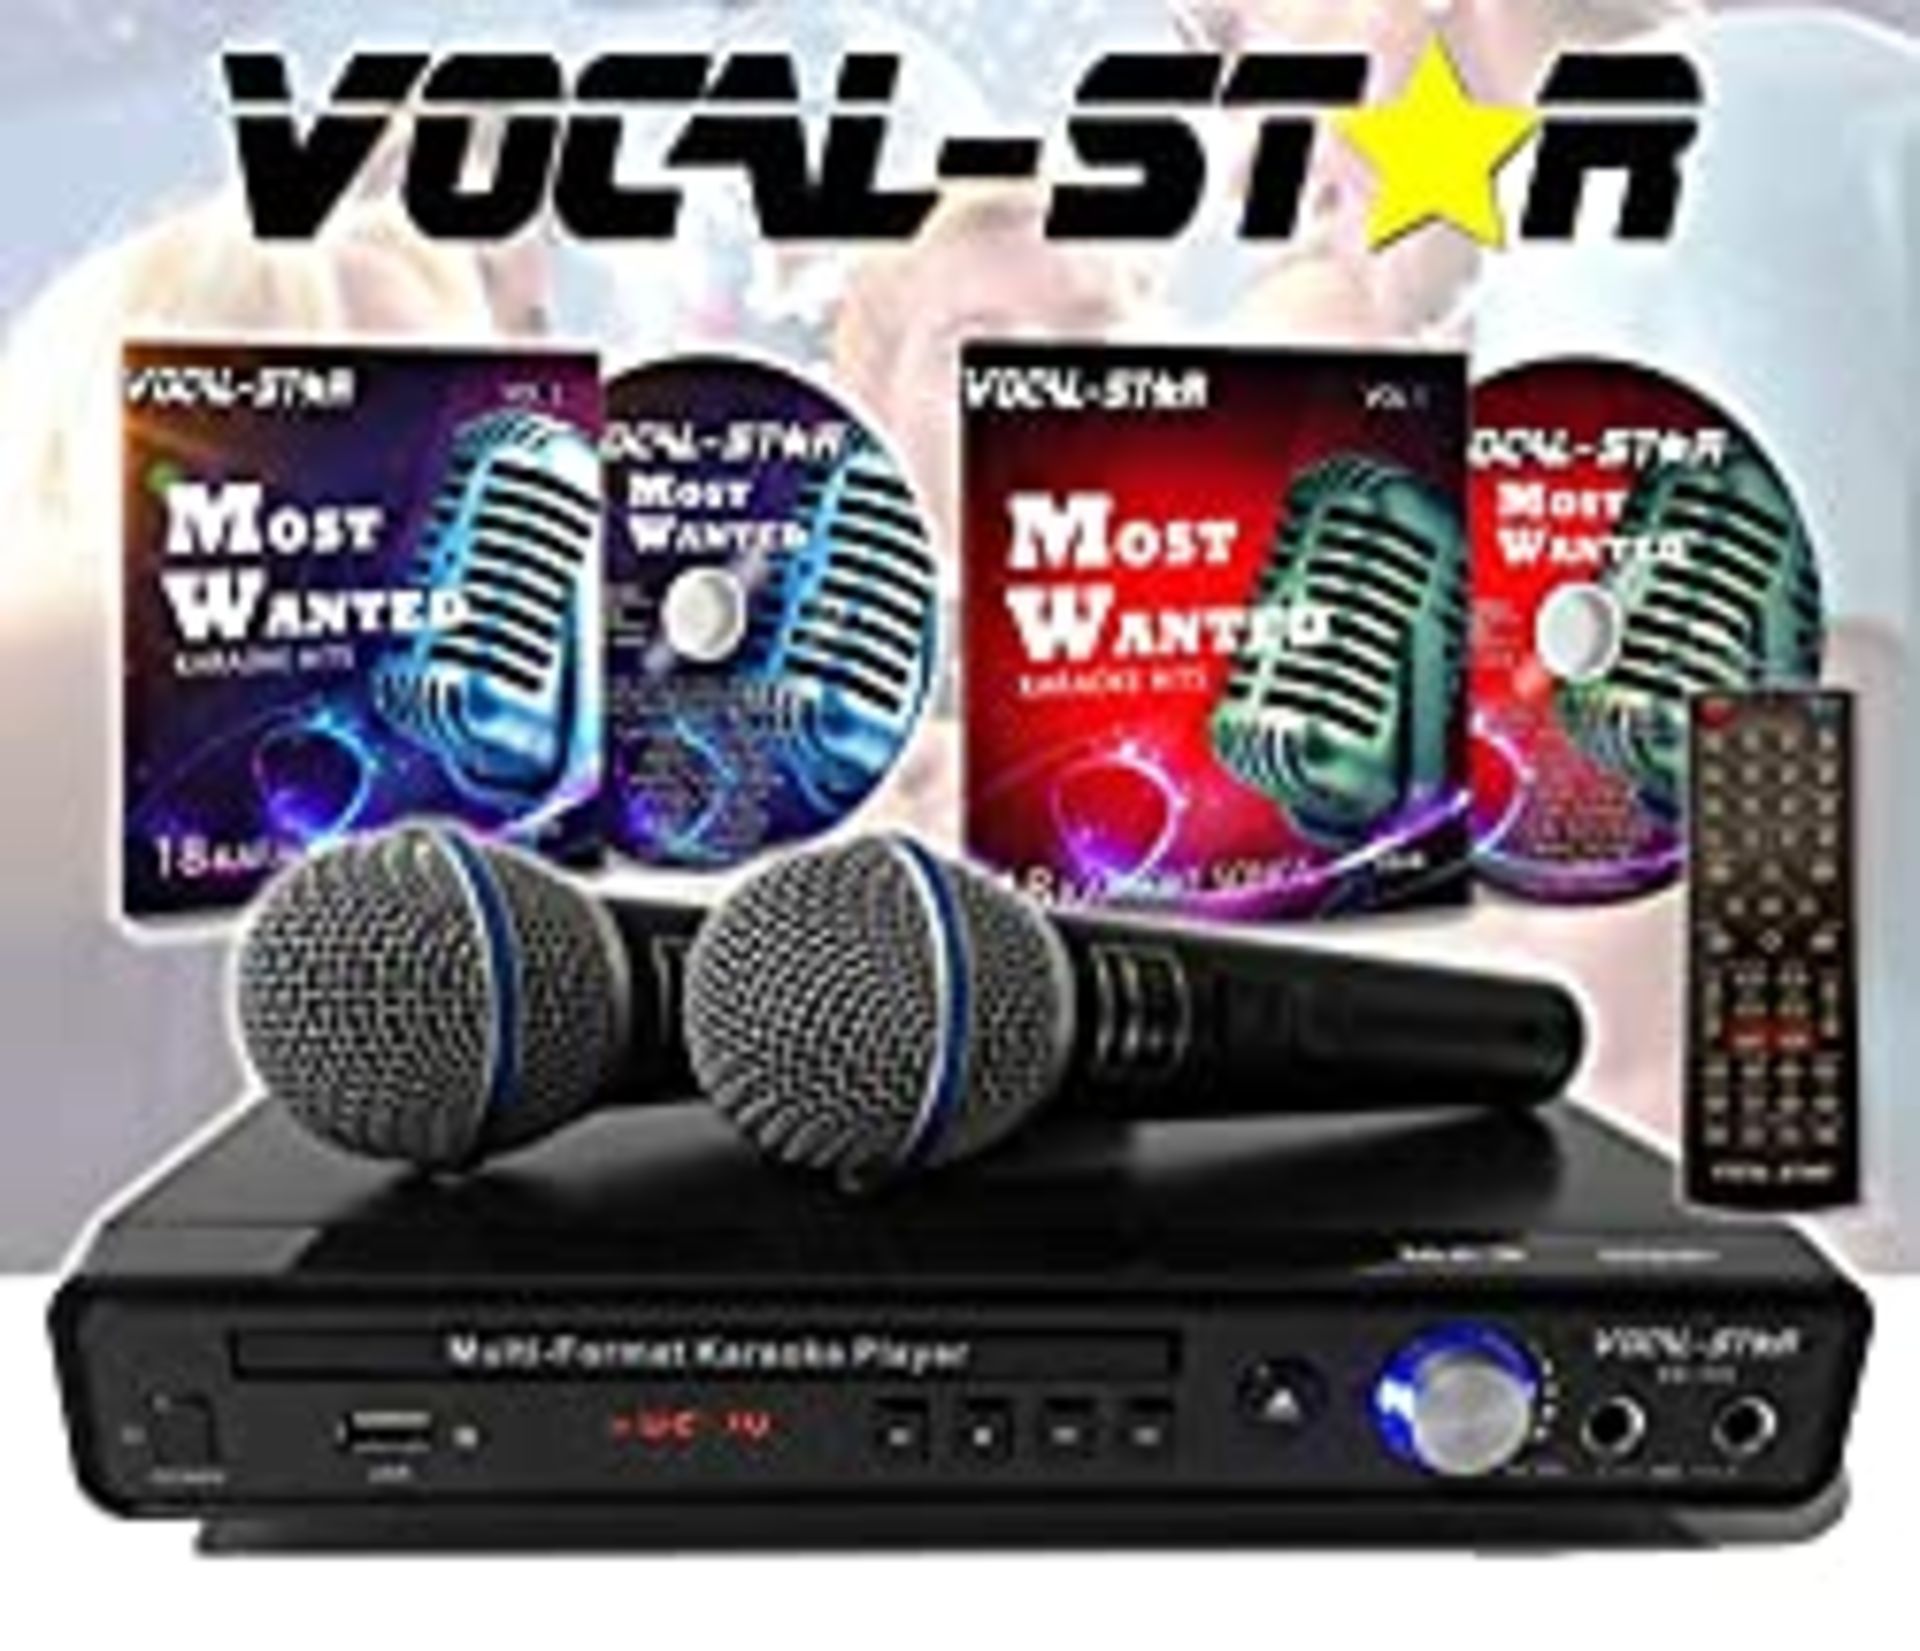 RRP £49.99 Vocal-Star VS-400 CDG DVD HDMI Karaoke Machine Including 2 Microphones & Songs